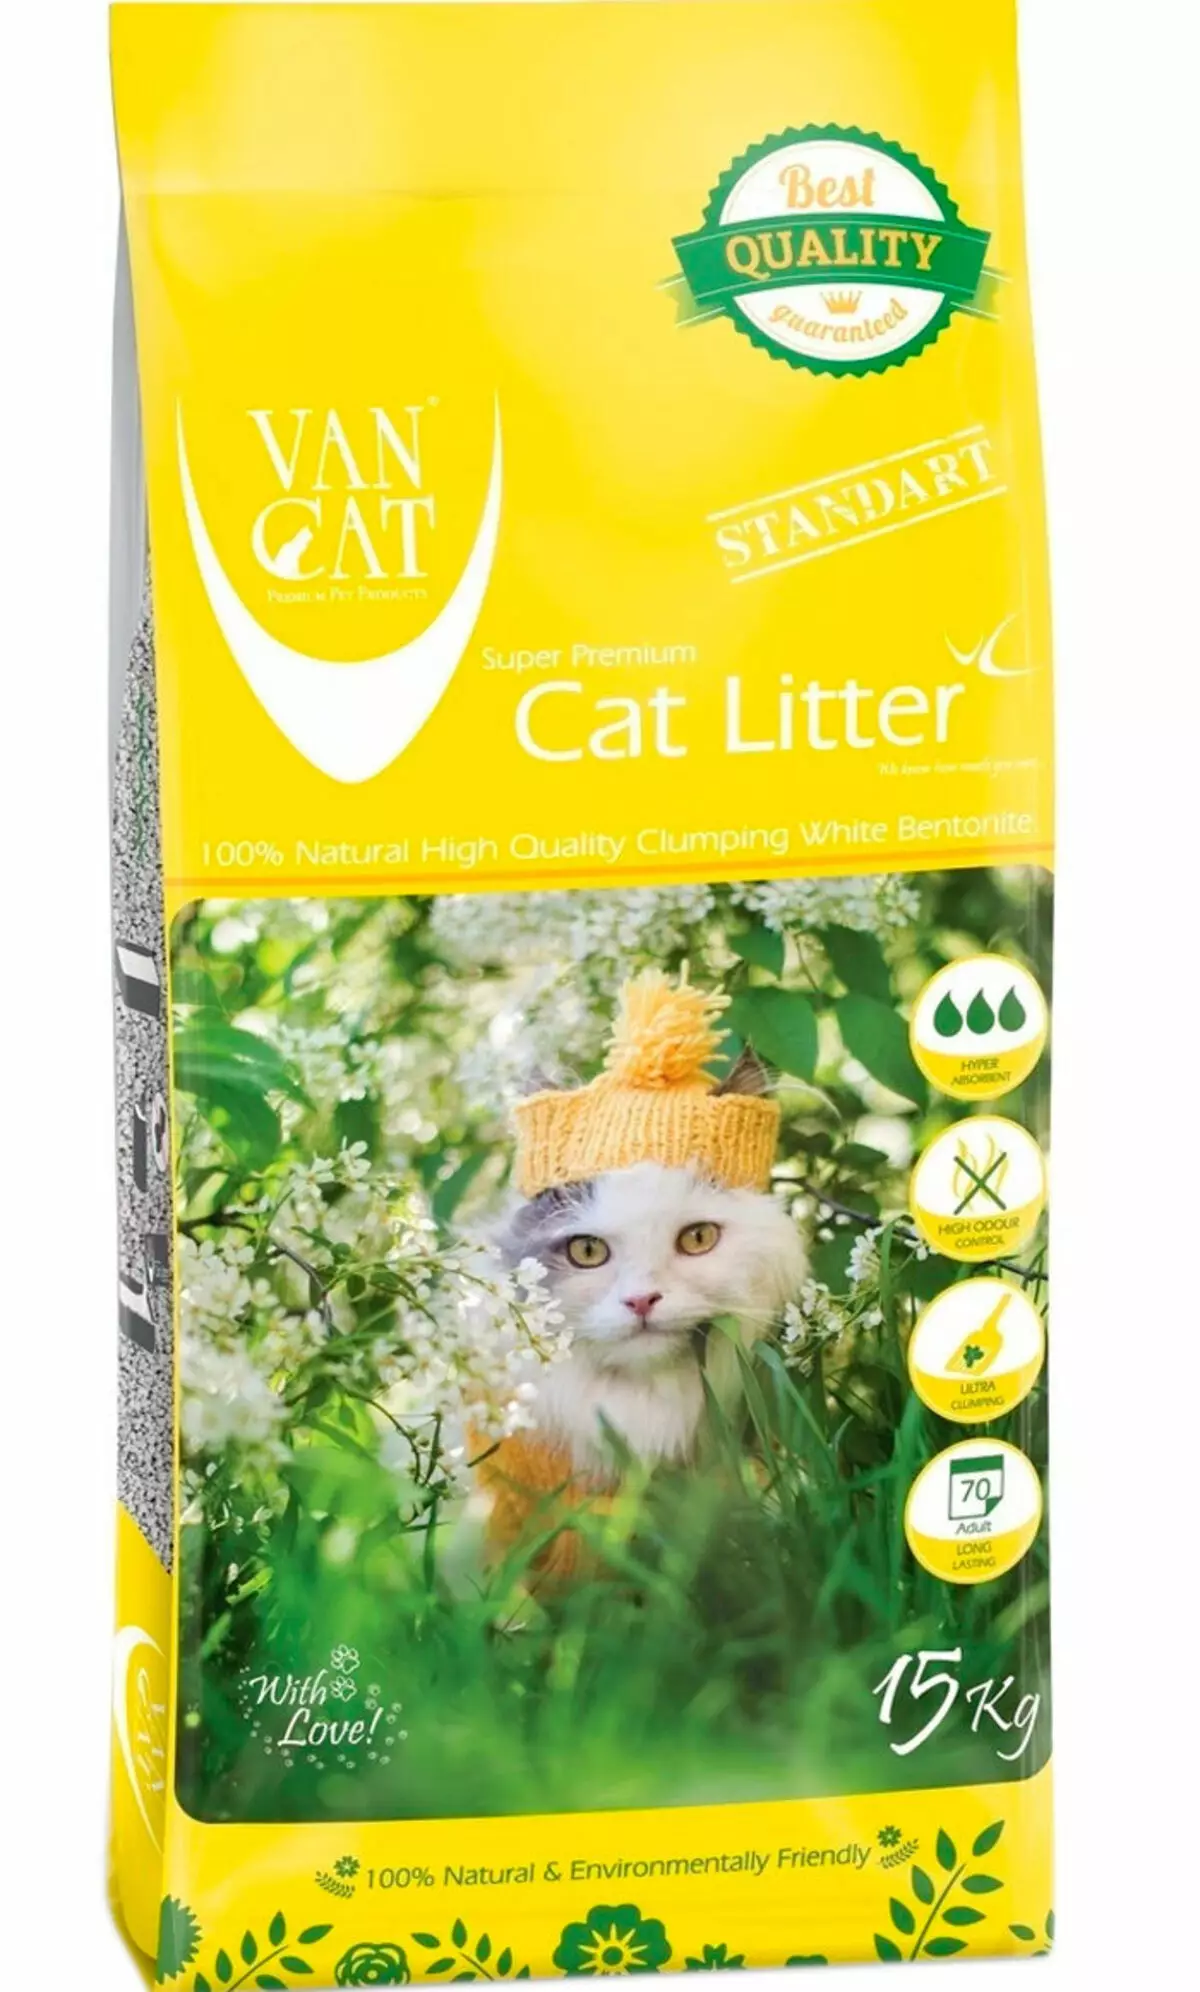 Fillers Van Cat: Cat အိမ်သာအတွက် Cat အိမ်သာအတွက် 20% သောကြောင်အိမ်သာ 